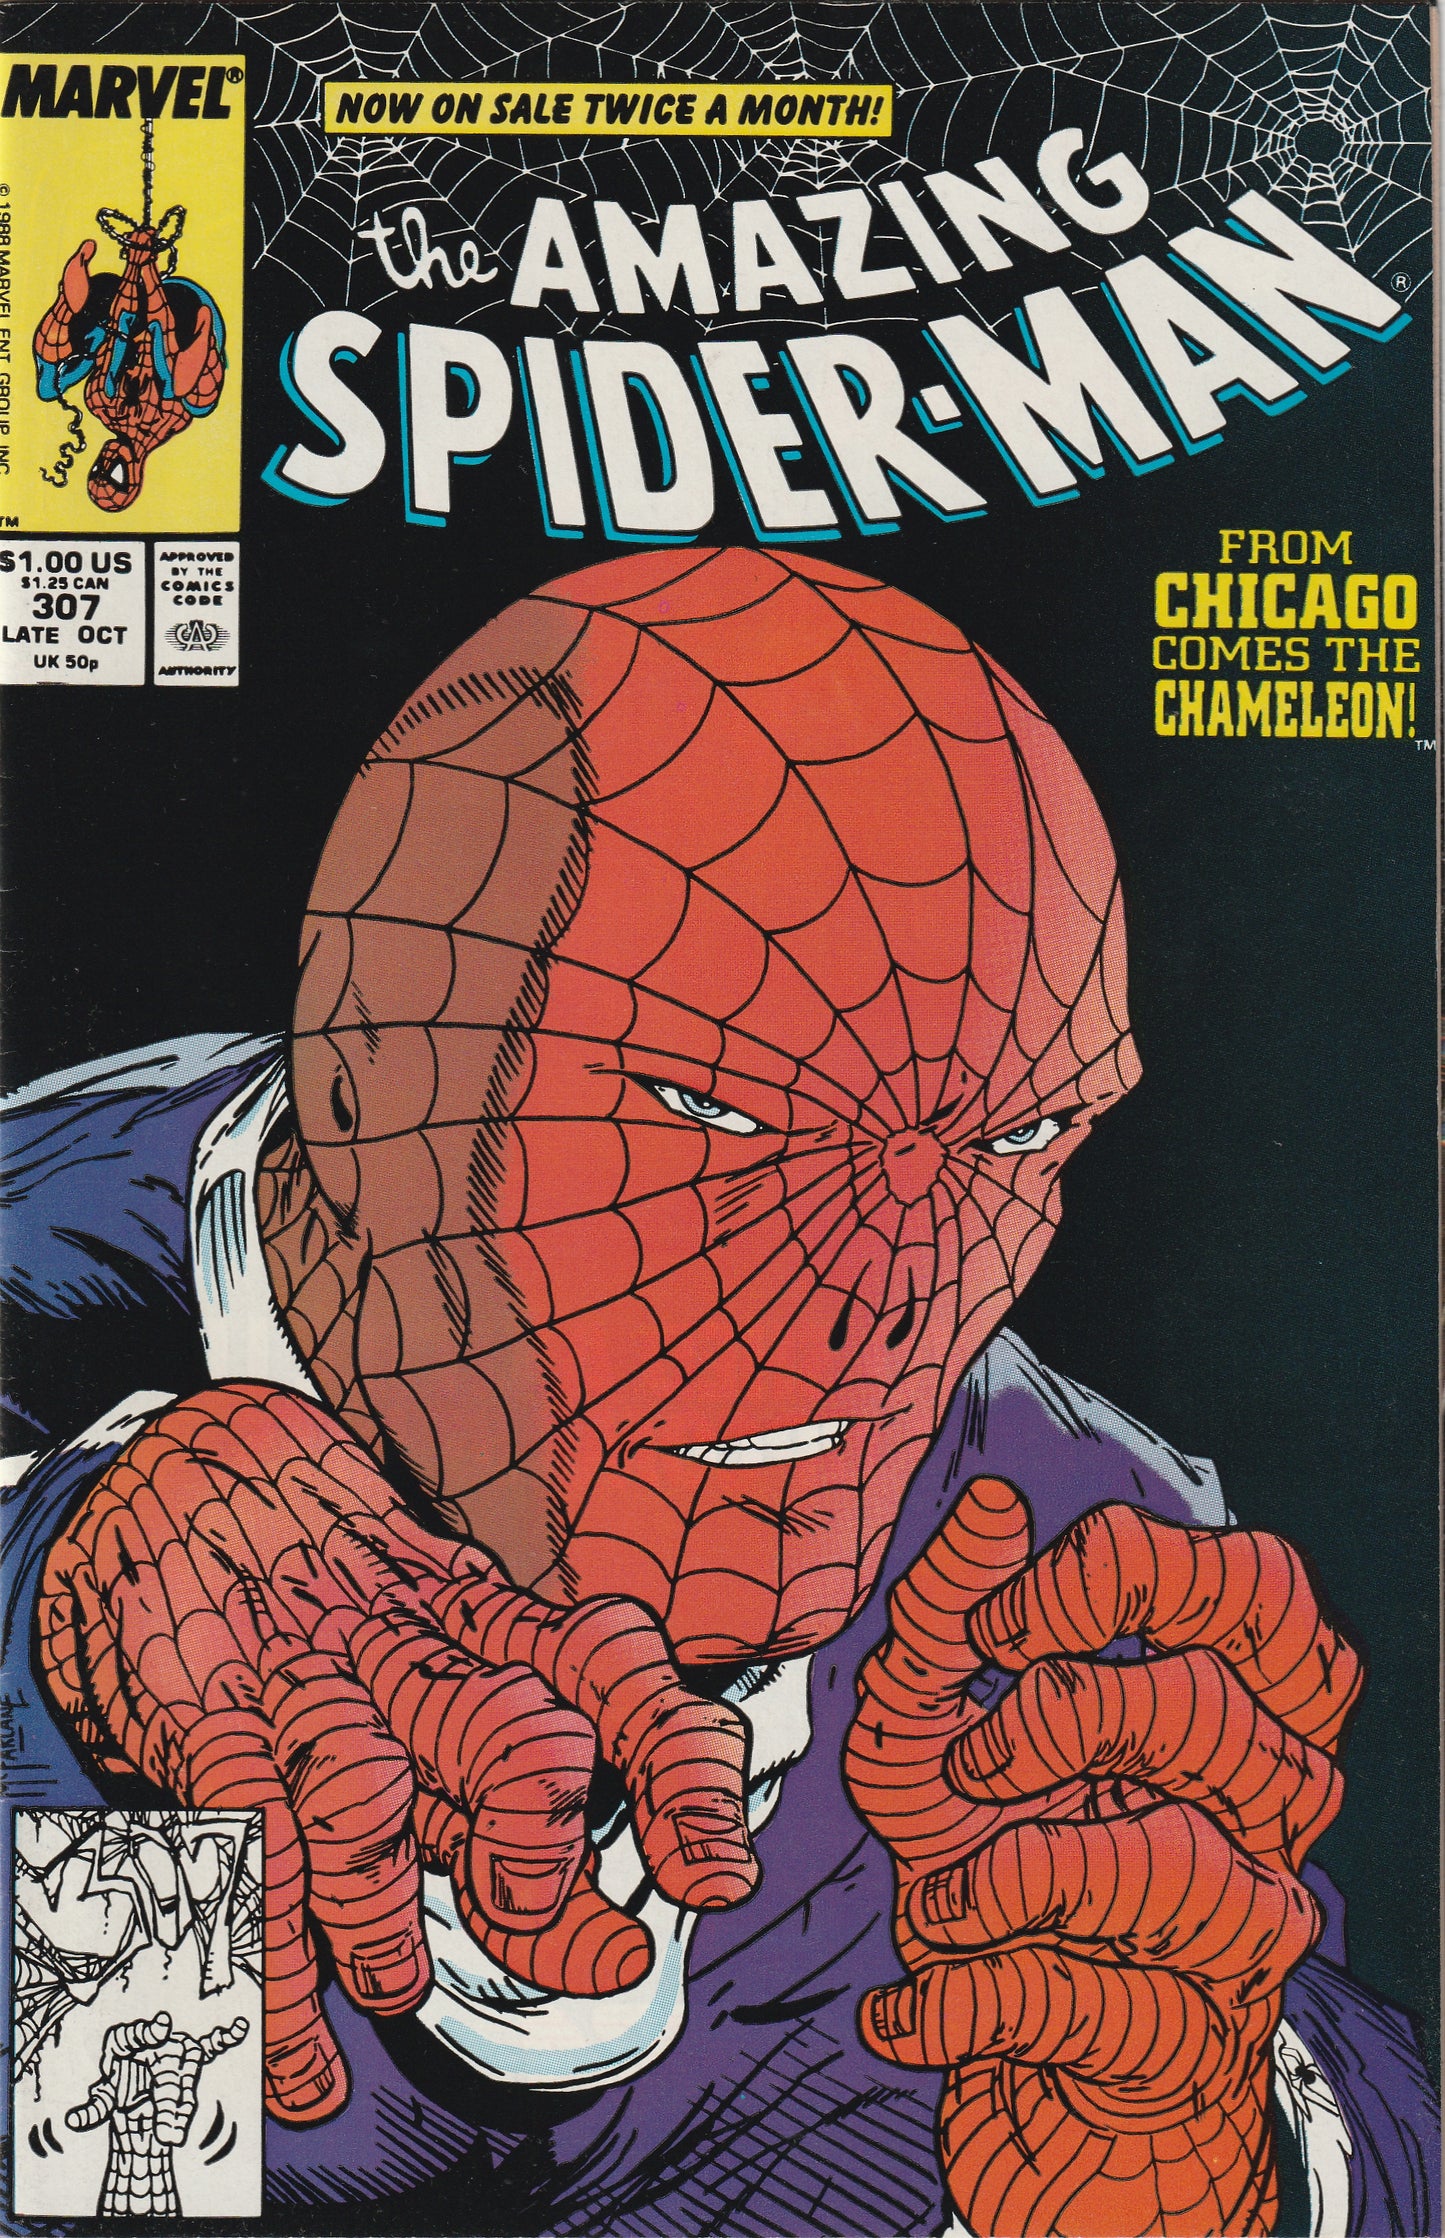 Amazing Spider-Man #307 (1988) - Chameleon Appearance, Todd McFarlane art